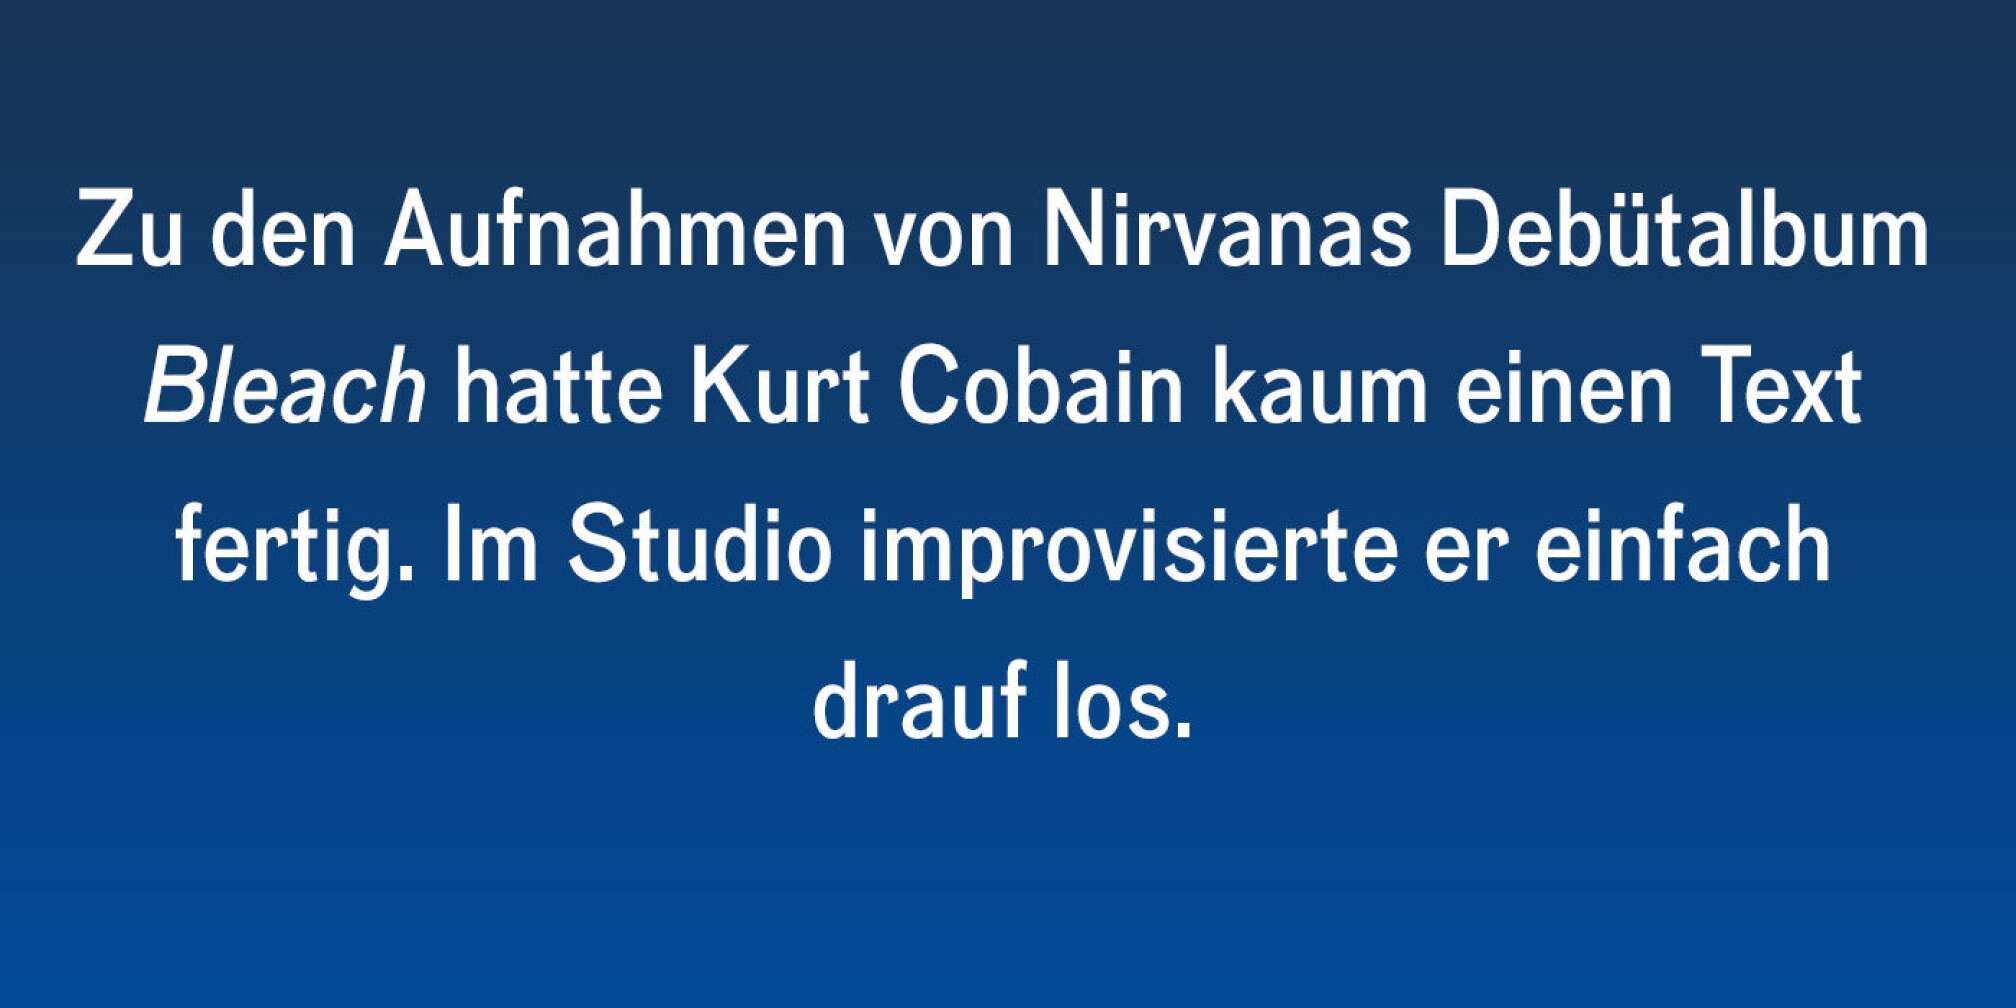 10 Fakten über Kurt Cobain